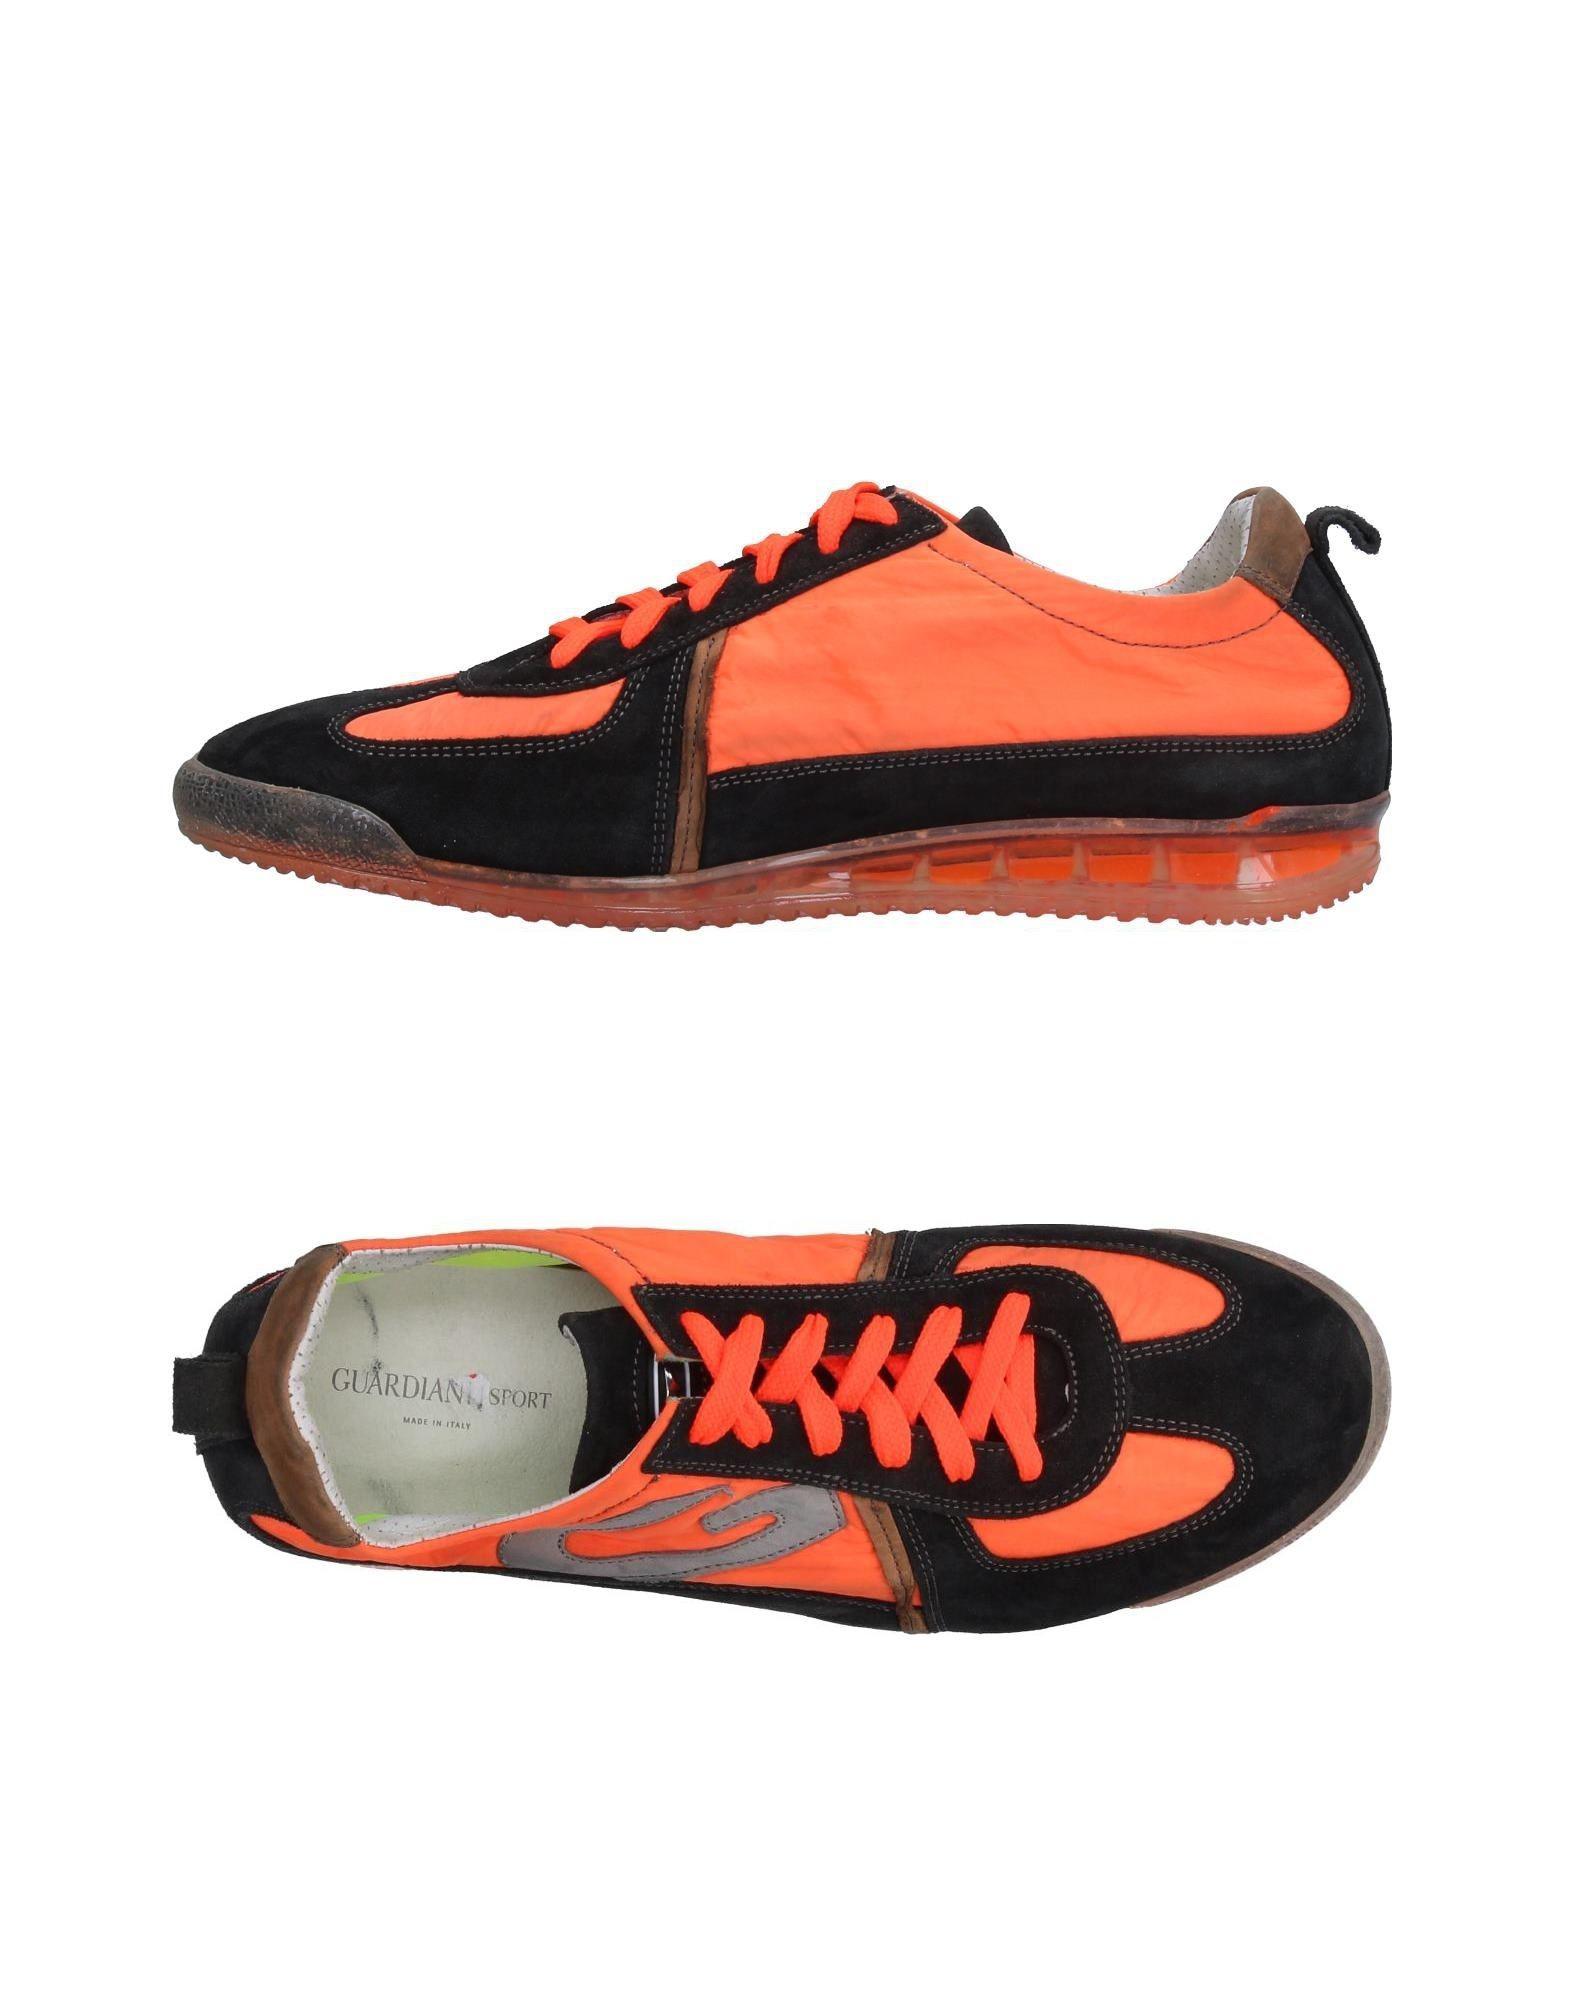 Alberto Guardiani Leather Low-tops \u0026 Sneakers in Orange for Men - Lyst